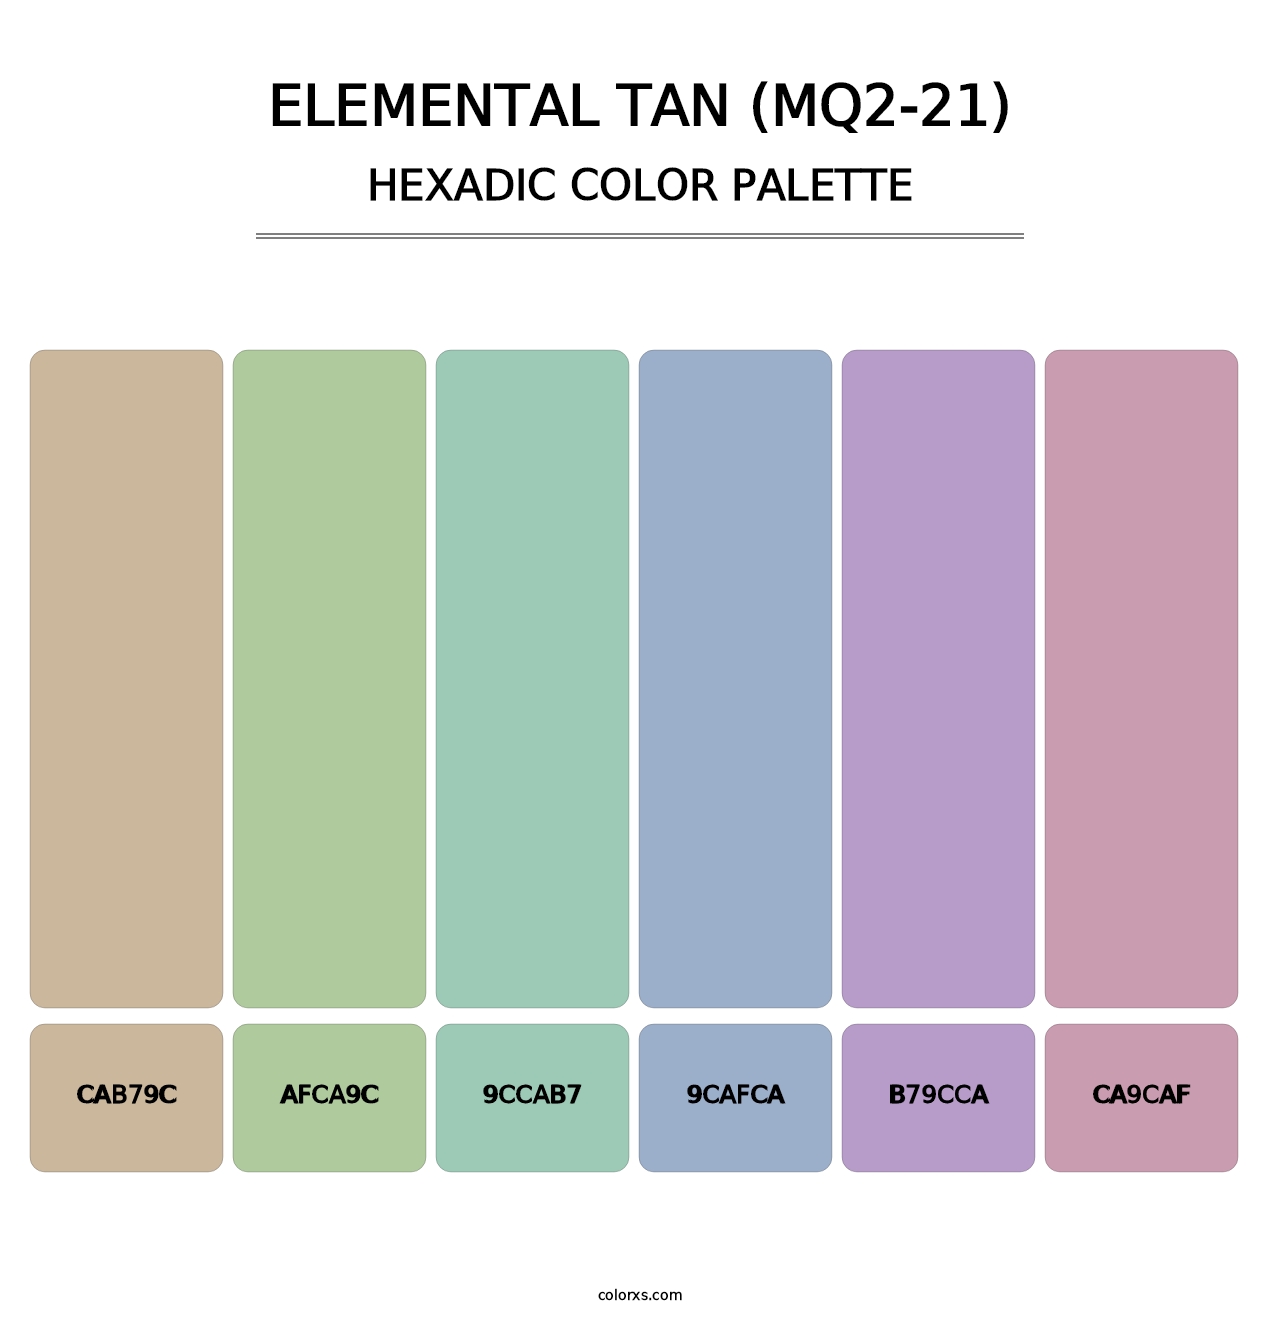 Elemental Tan (MQ2-21) - Hexadic Color Palette